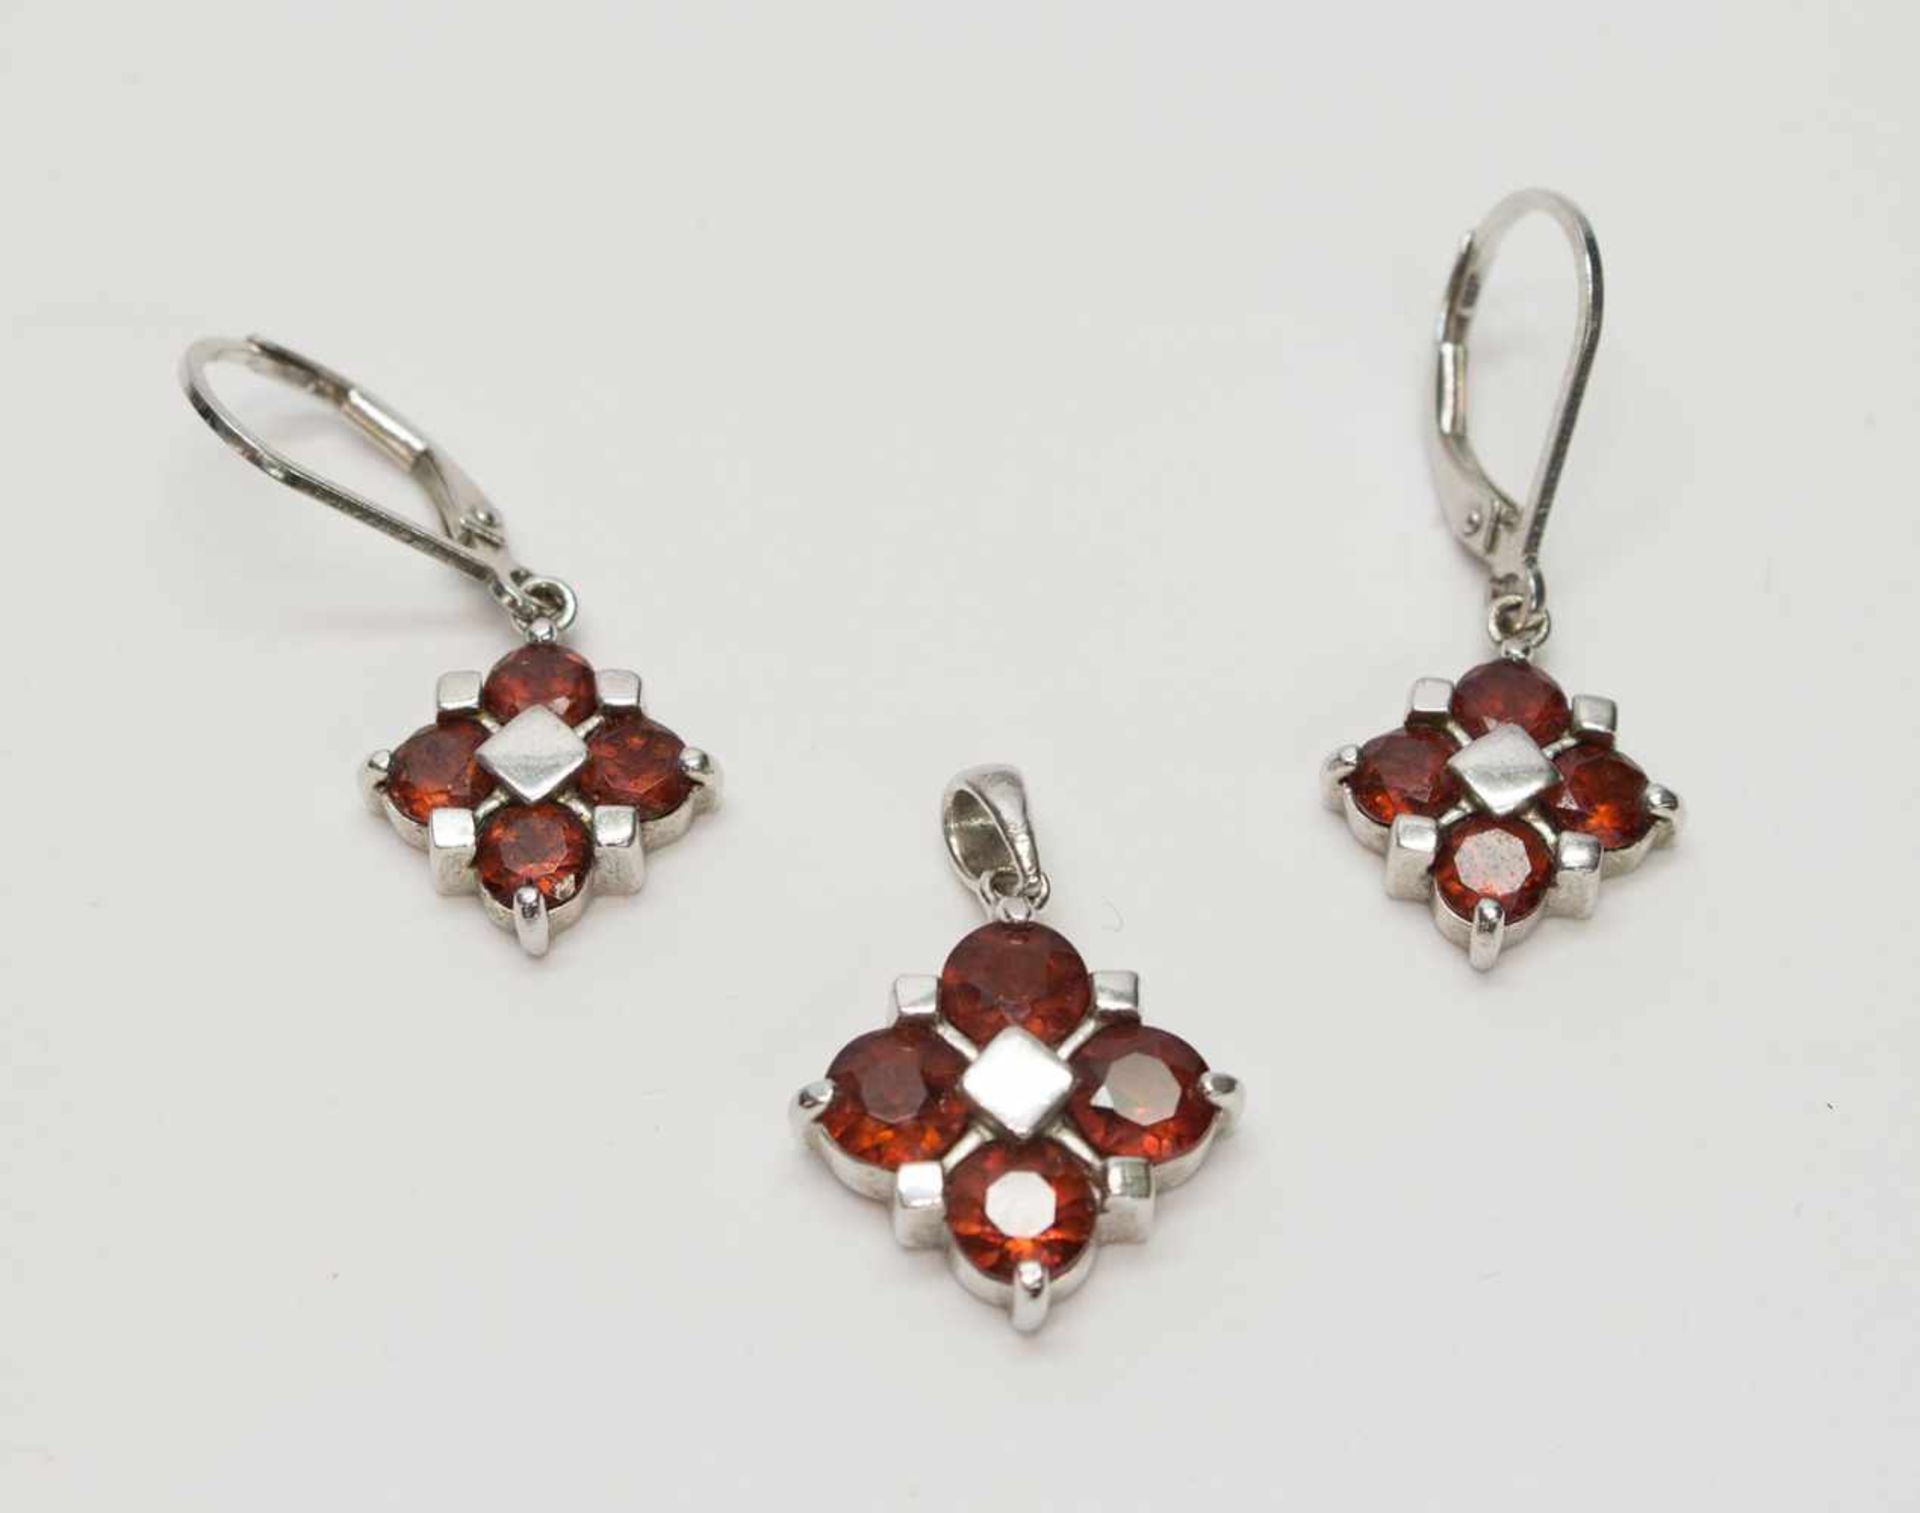 Schmuckset 925er Silber, Ohrhänger und Kettenanhänger, jew. mit 4 blütenförmig angeordneten roten